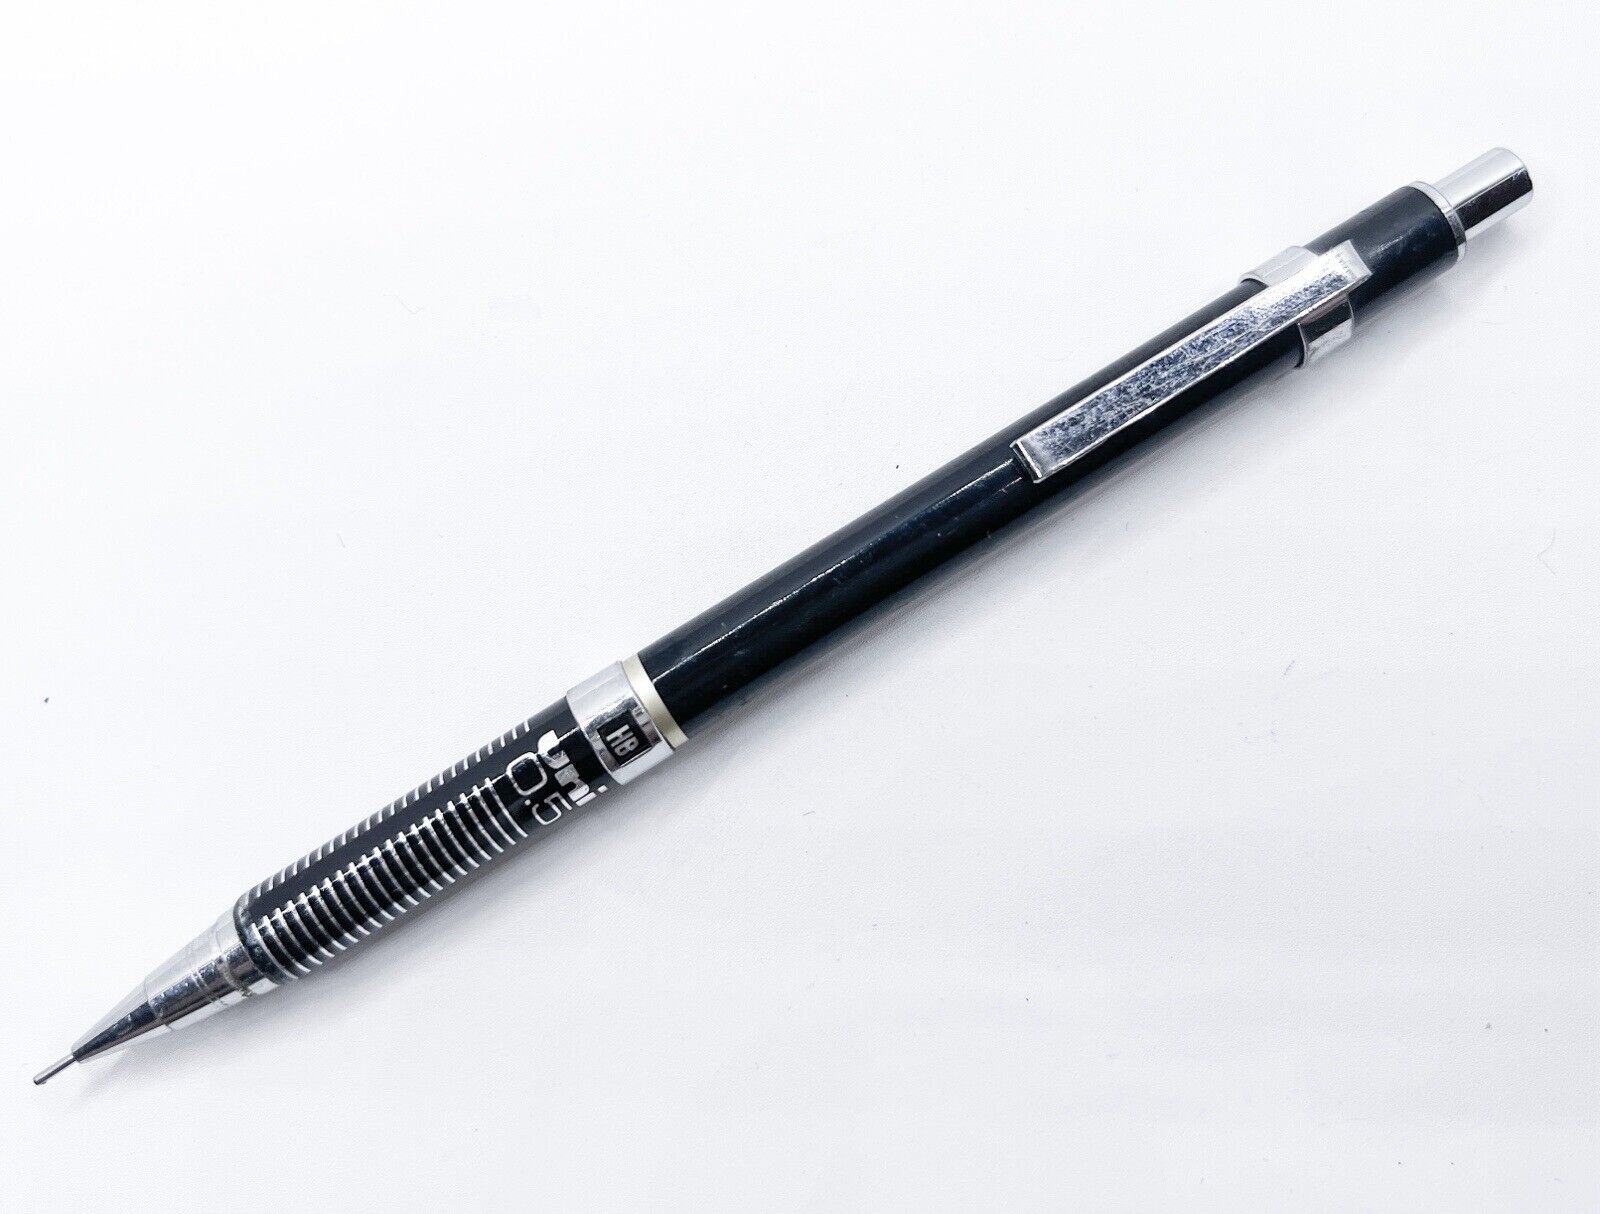 Mitsubishi Uni 0.5mm Mechanical Pencil Drafting Rare Version 